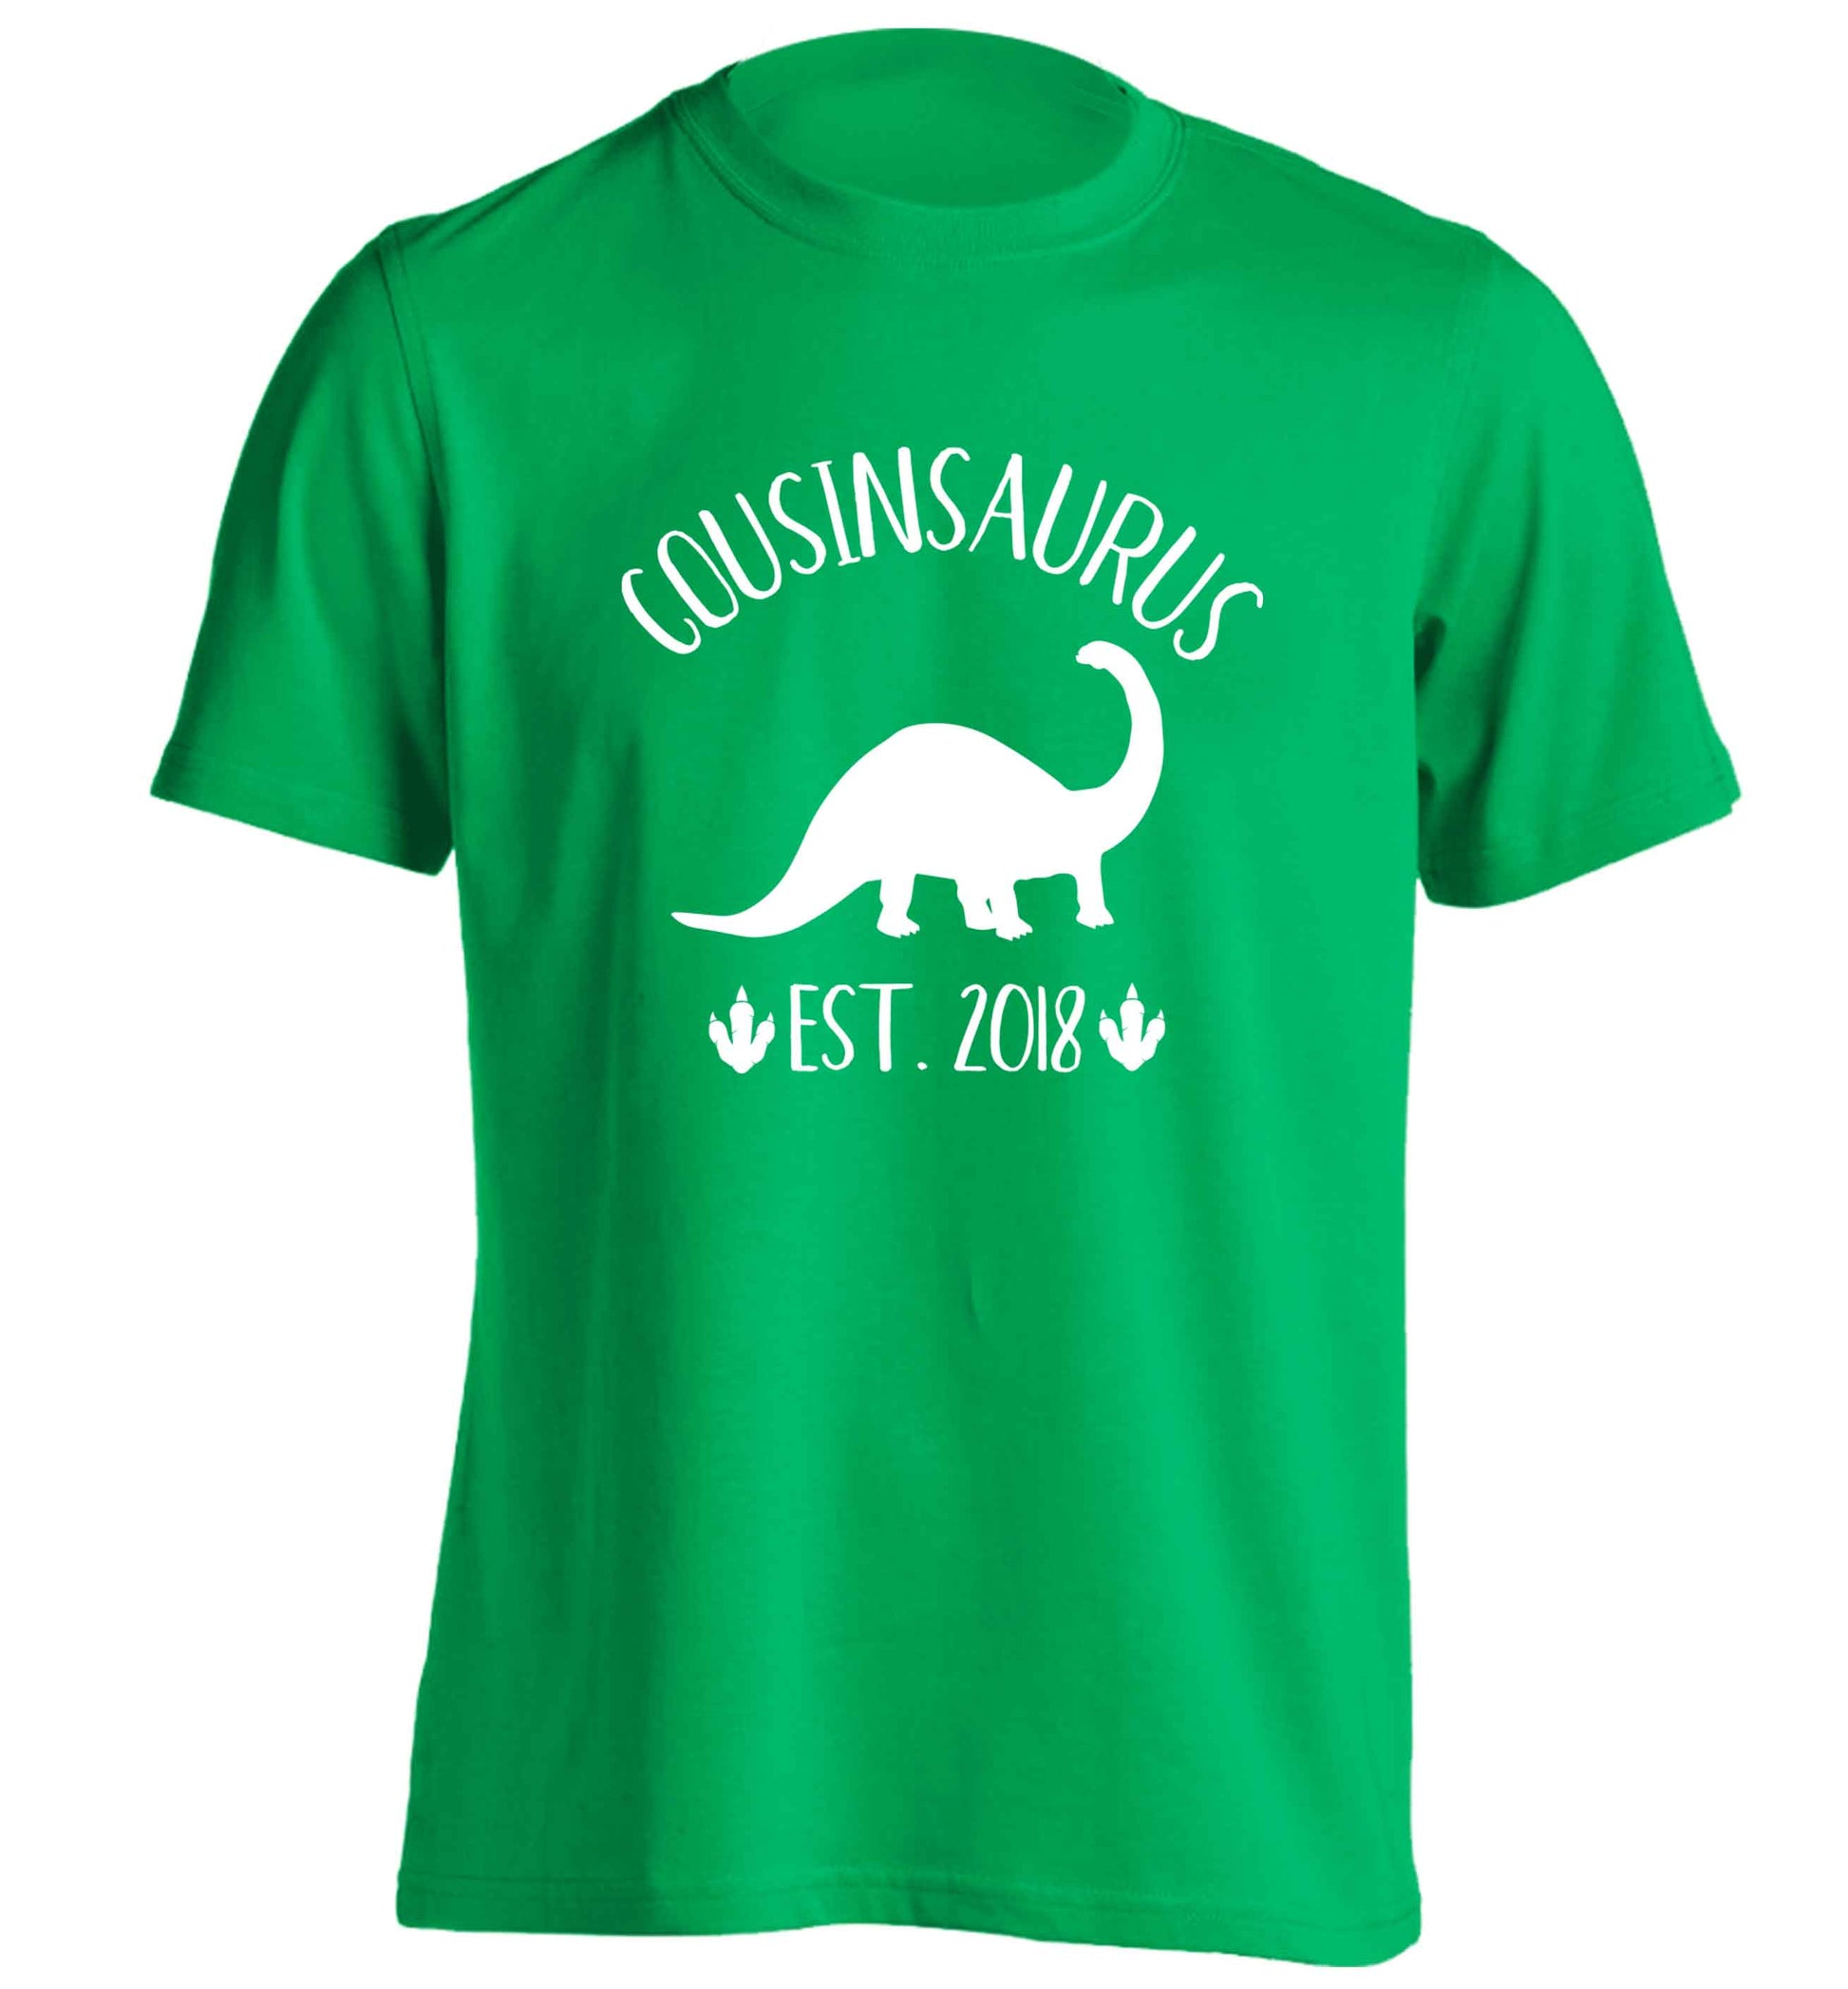 Personalised cousinsaurus since (custom date) adults unisex green Tshirt 2XL